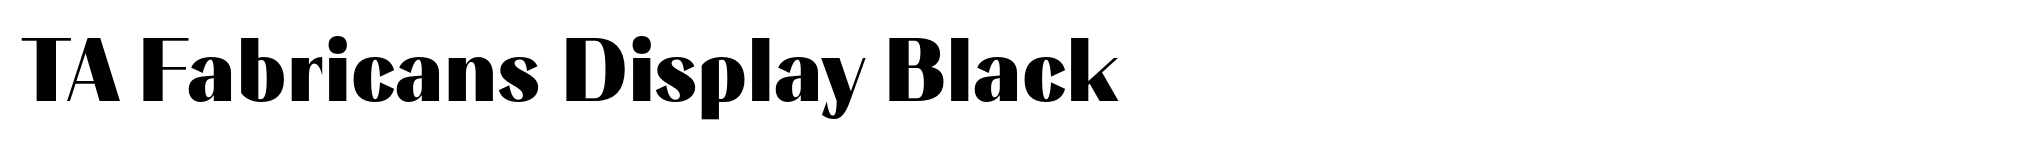 TA Fabricans Display Black image